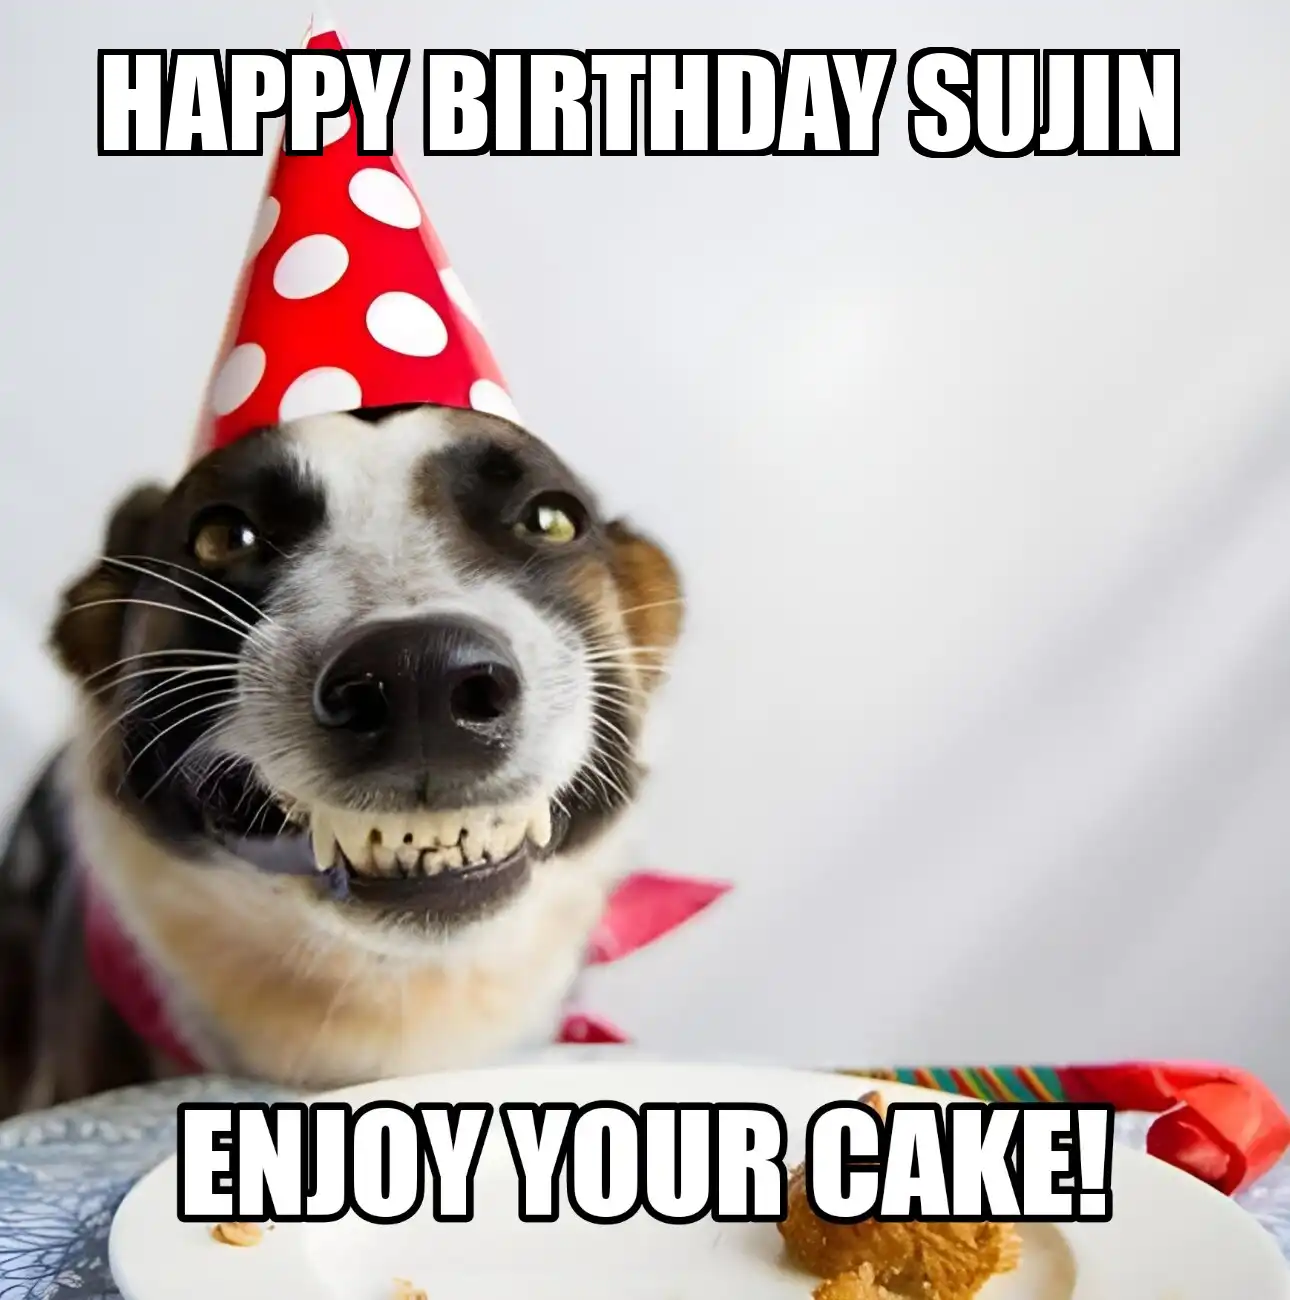 Happy Birthday Sujin Enjoy Your Cake Dog Meme